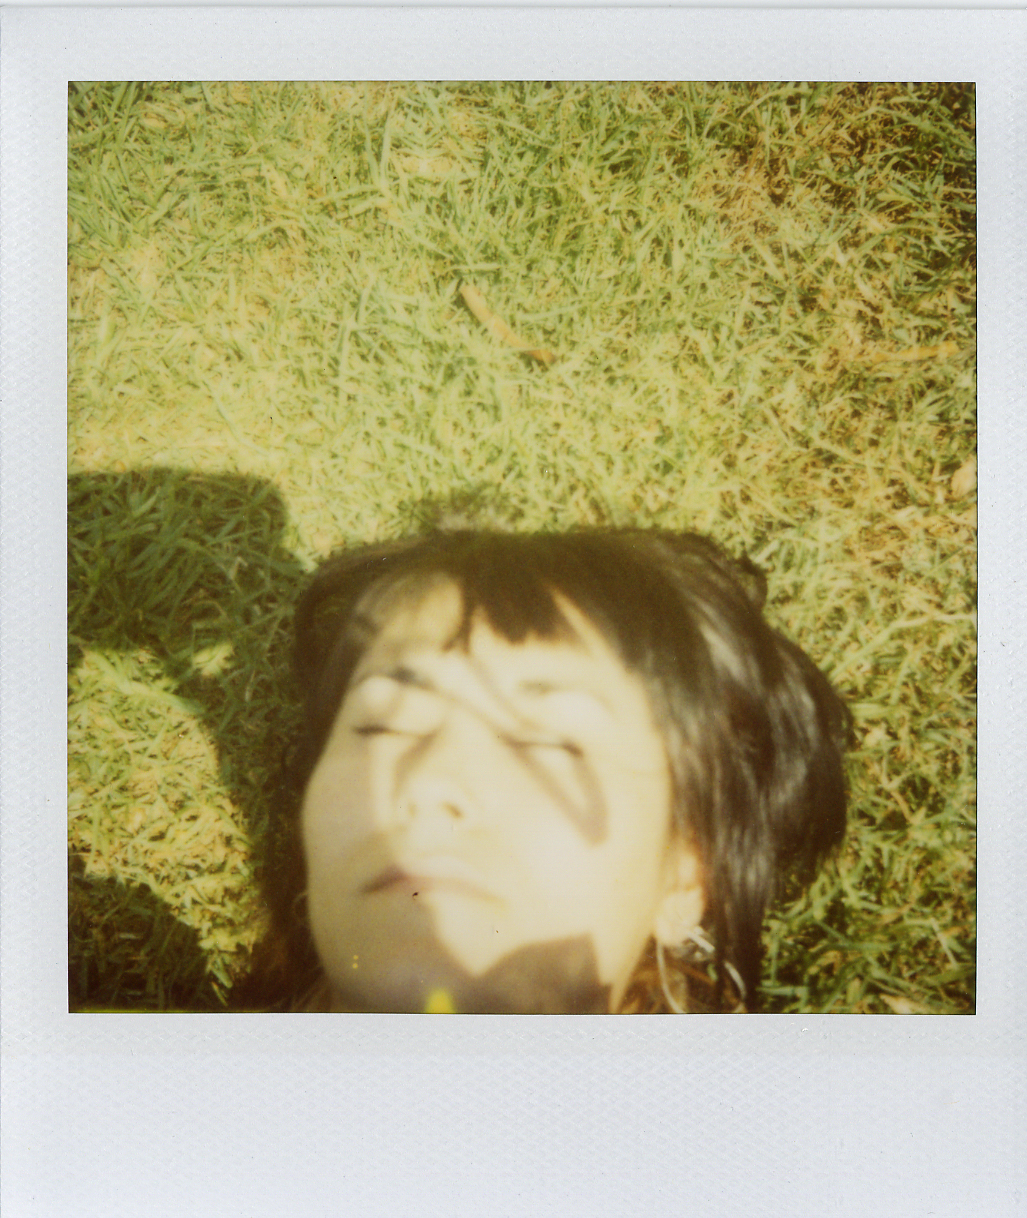 polaroid me in the grass